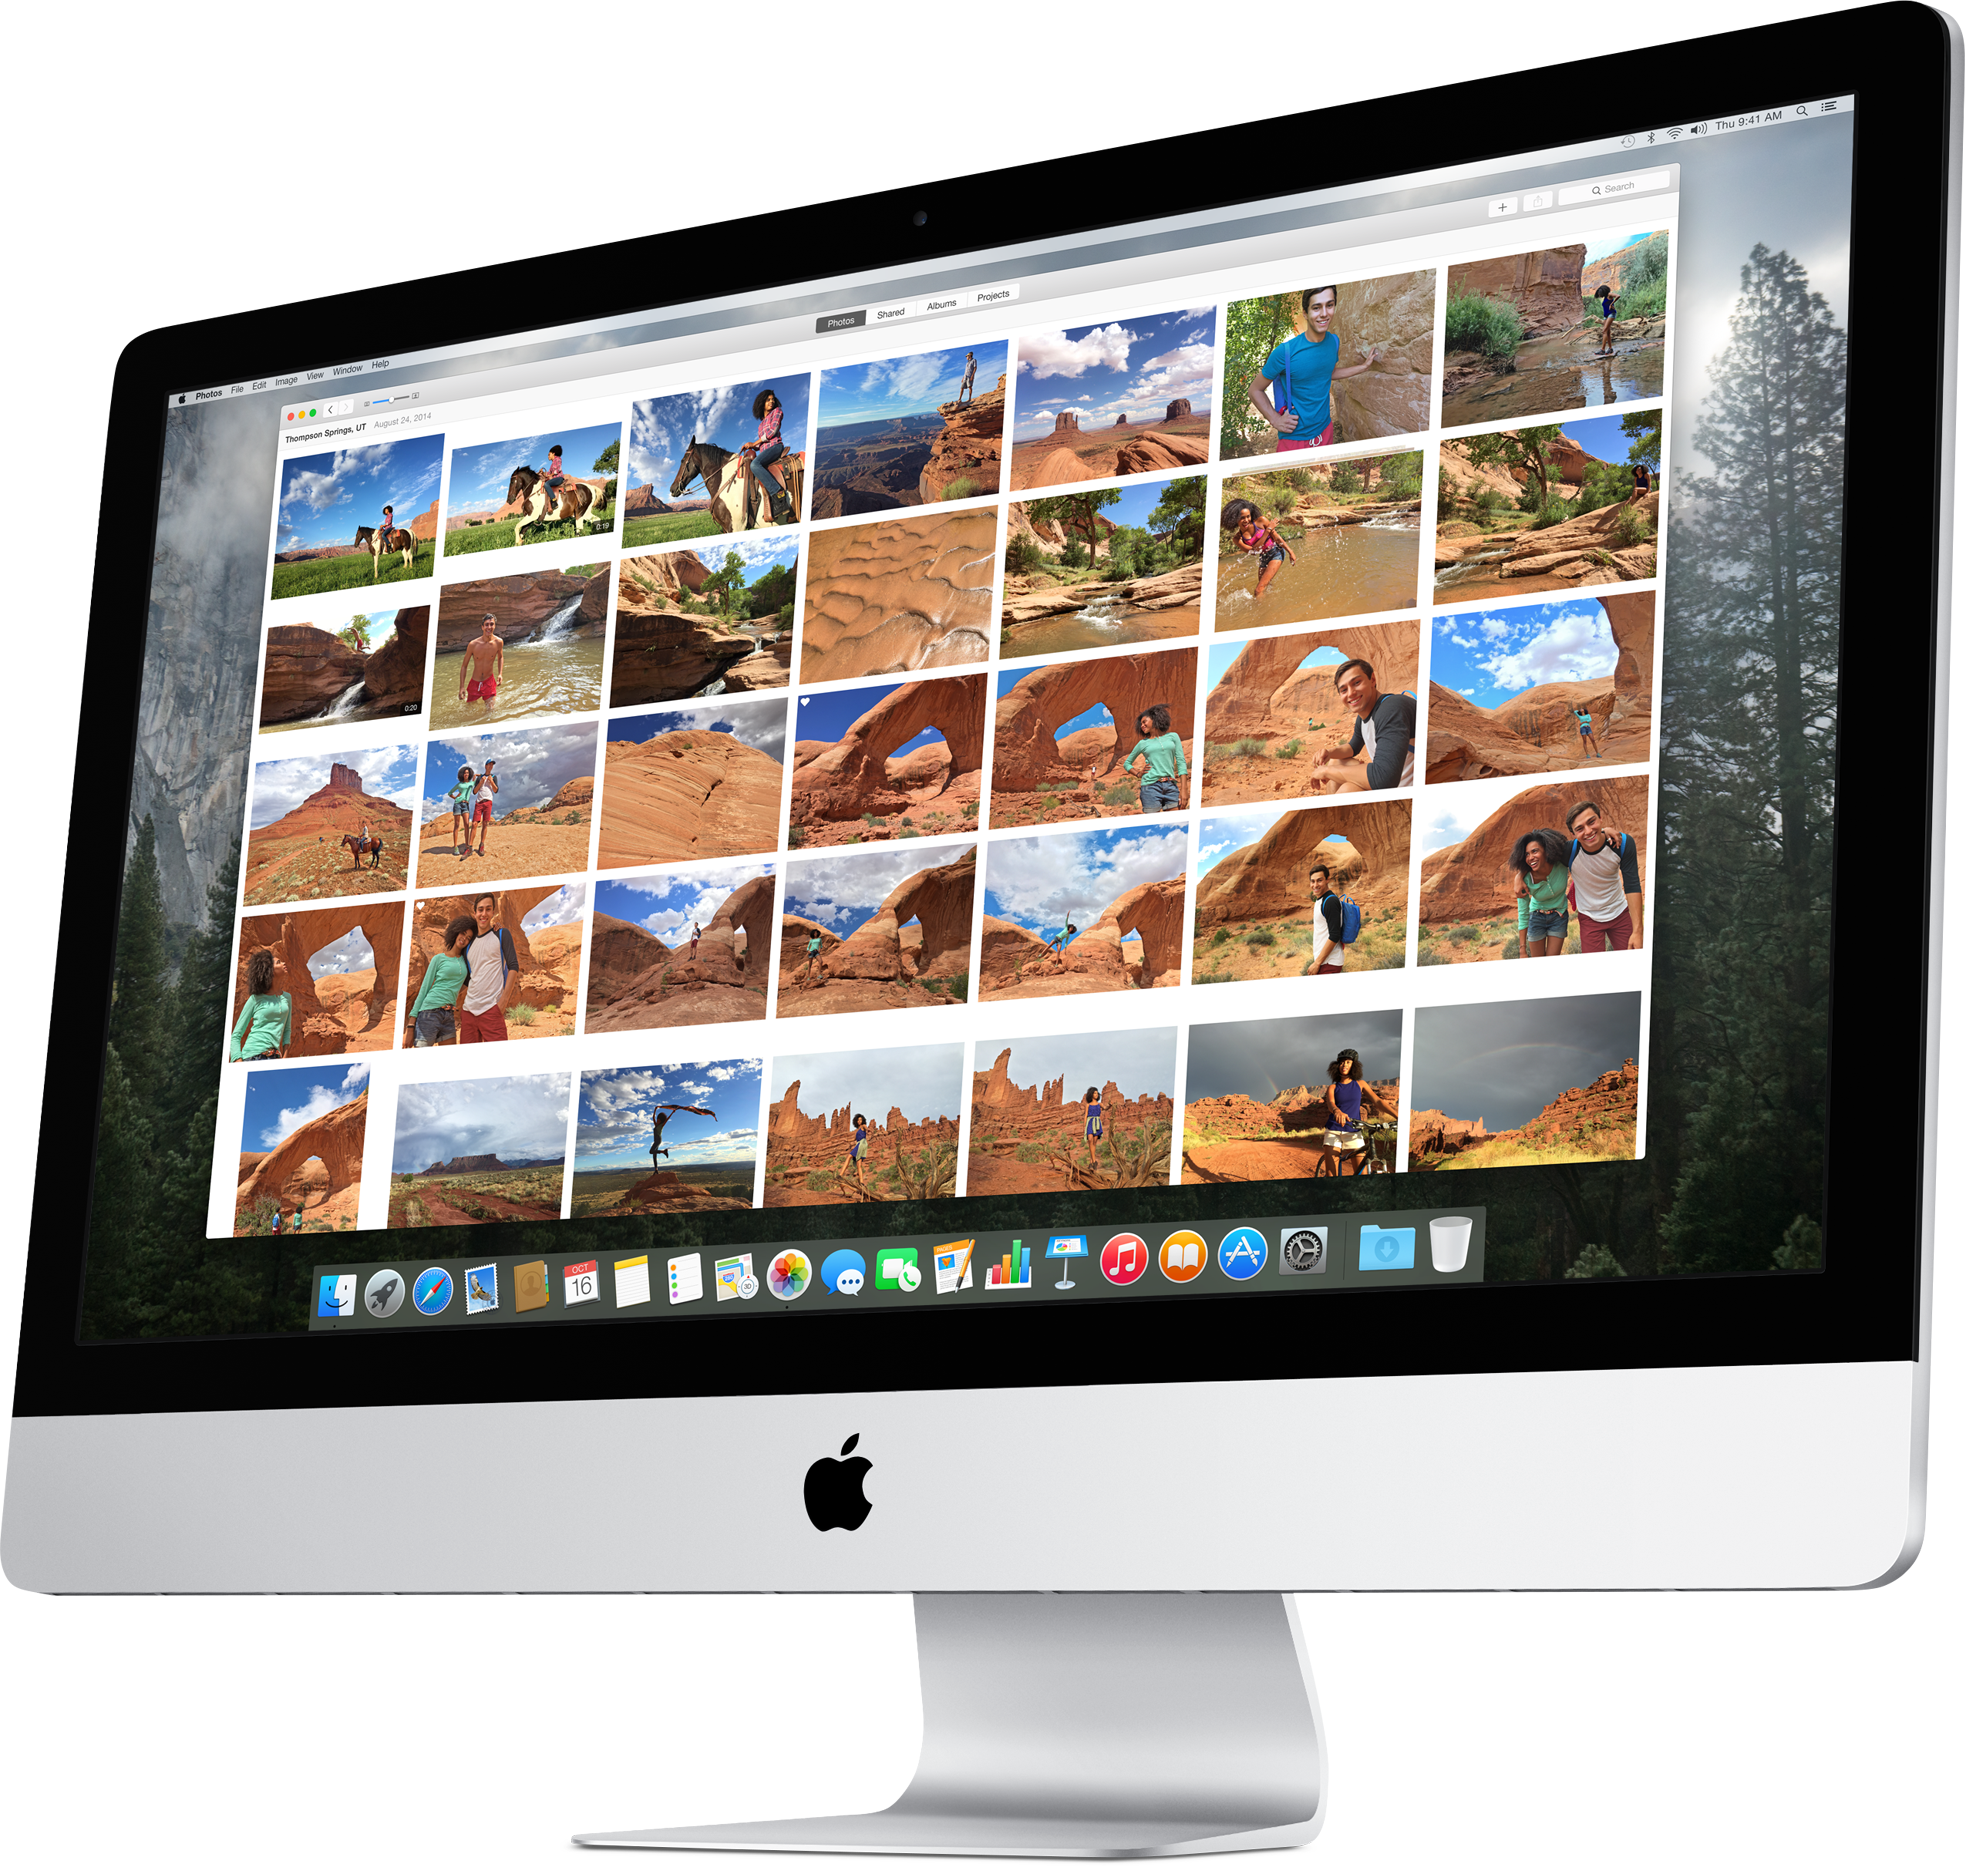 iMac Photos app